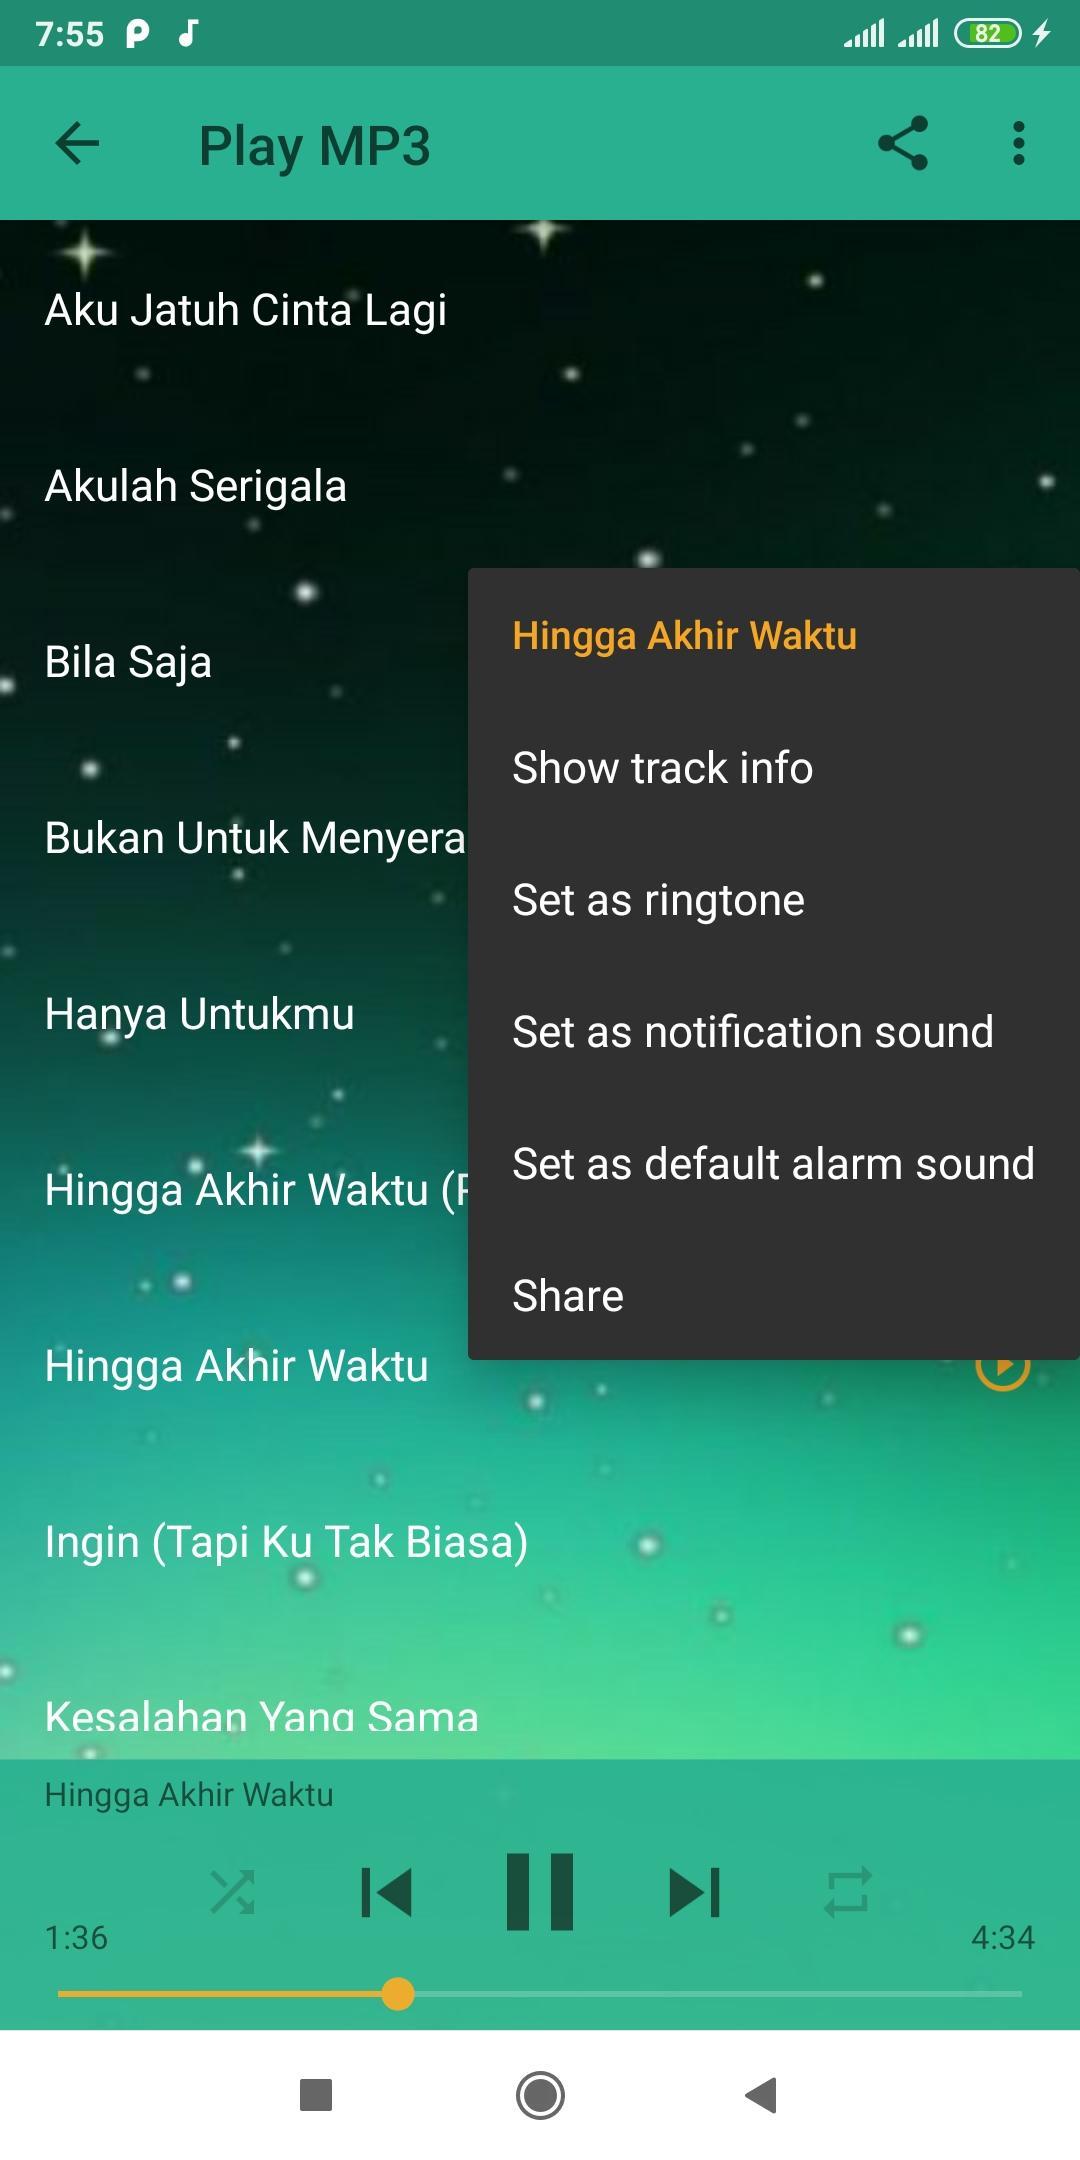 Lagu Nineball Hingga Akhir Waktu Offline Mp3 Para Android Apk Baixar